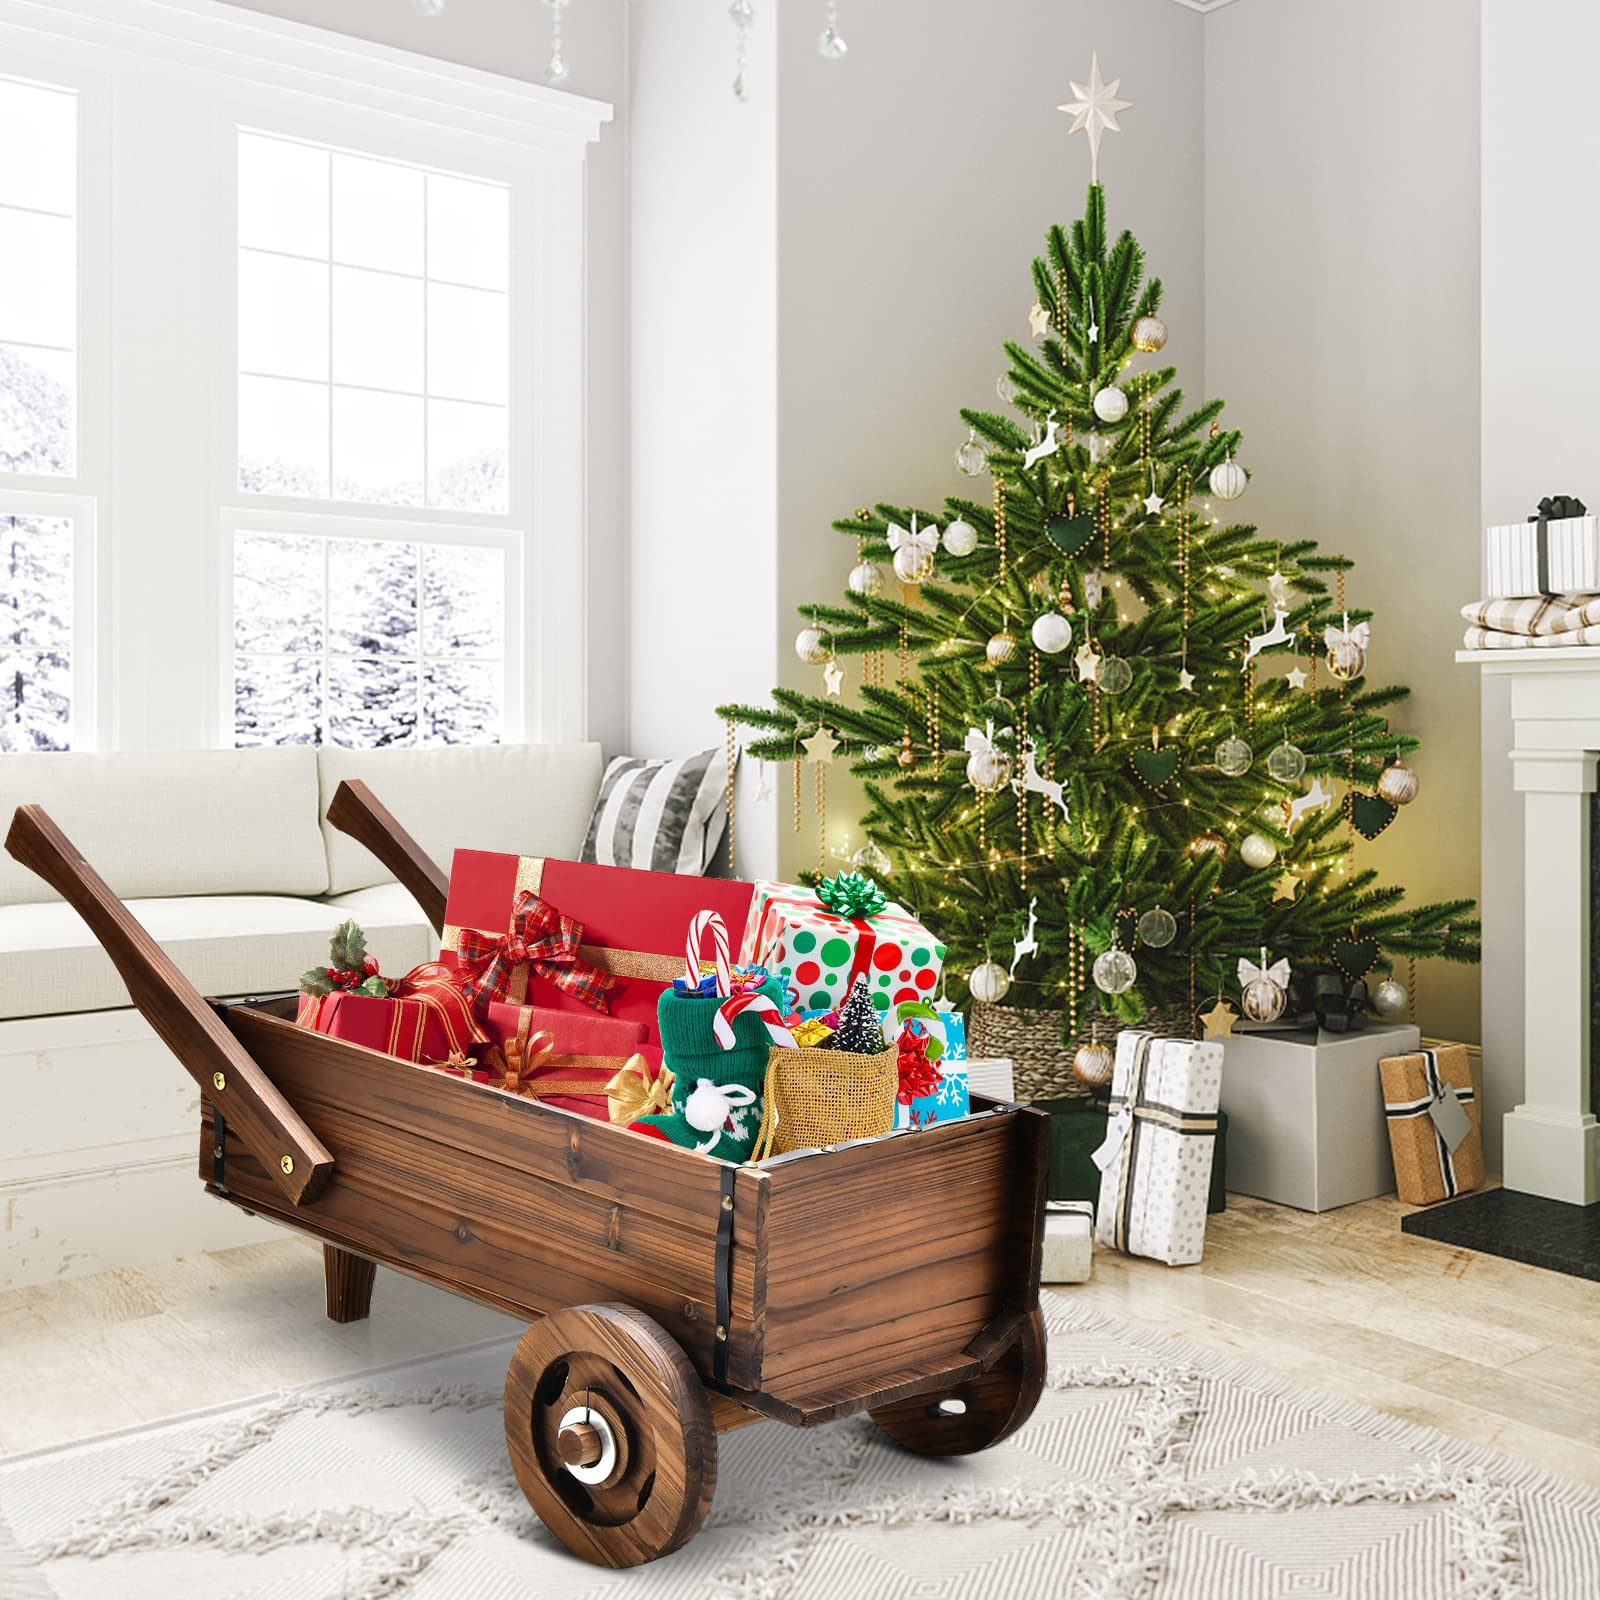 Giantex Wooden Wagon Planter Box, Decorative Wagon Cart with Wheels, Handles